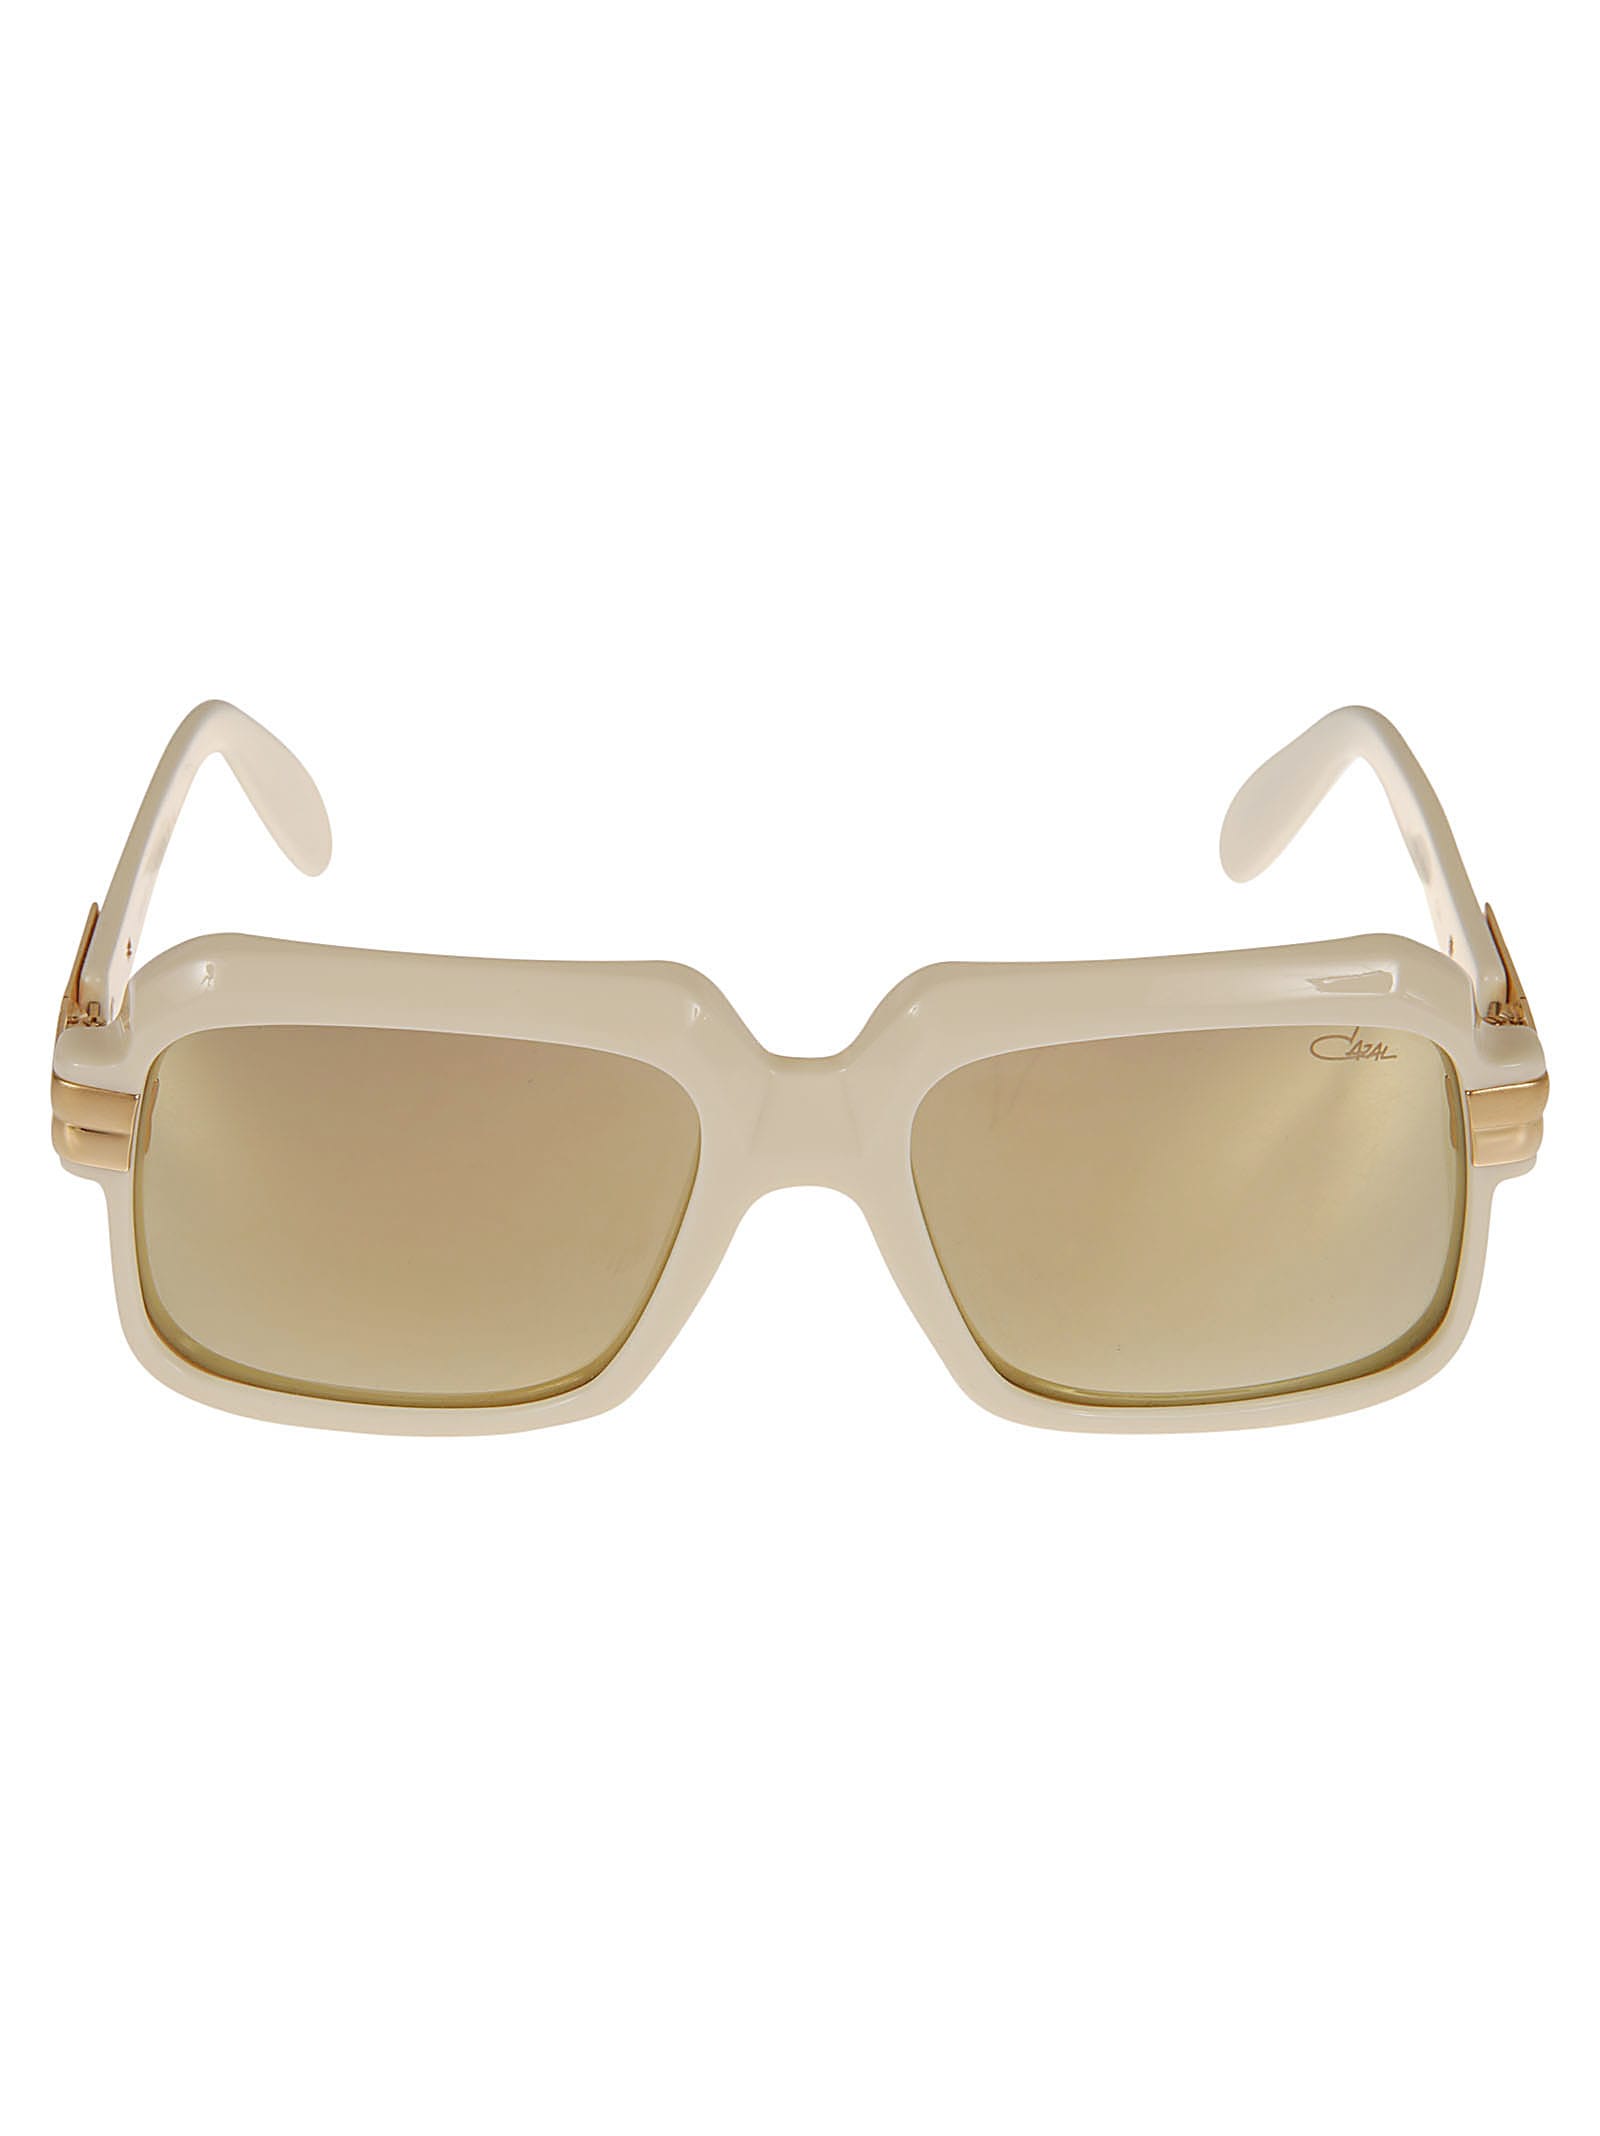 Cazal Classic Square Sunglasses